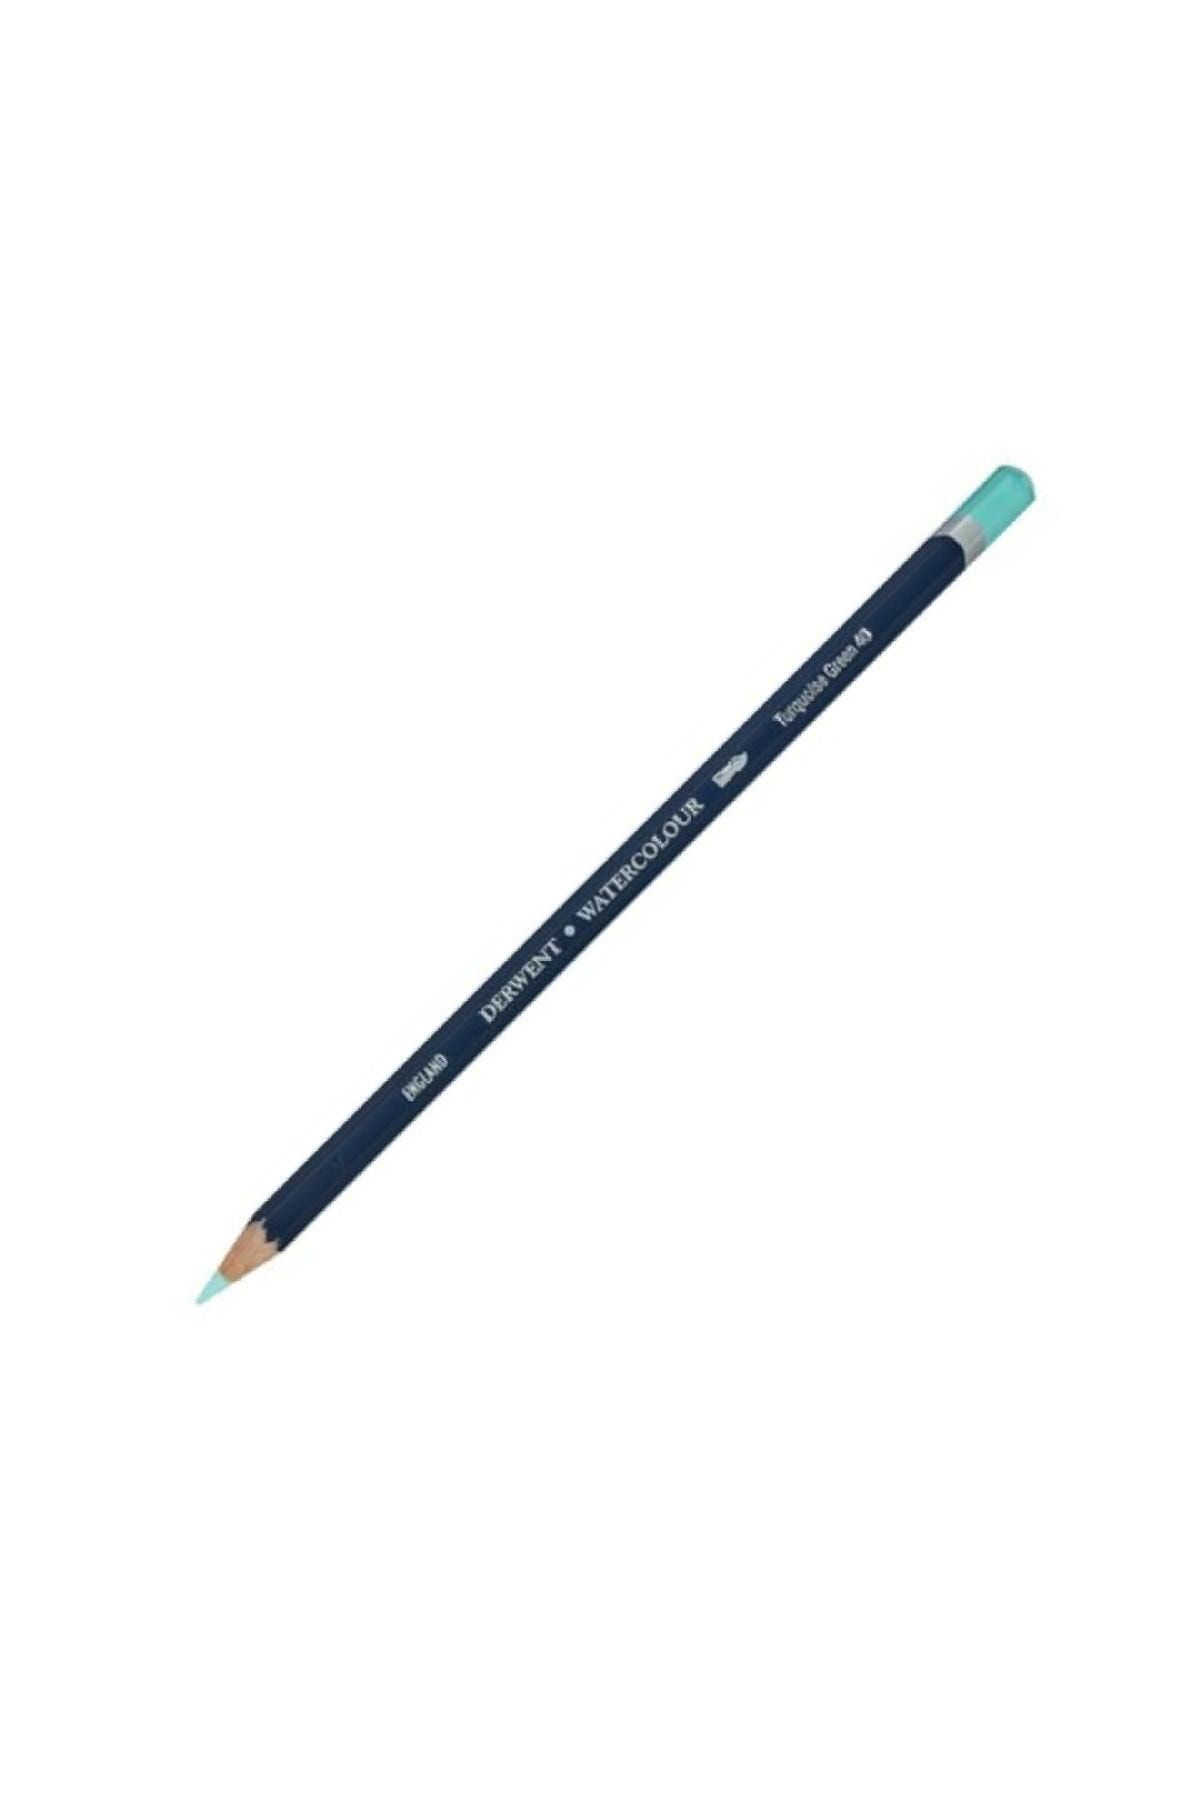 Derwent Watercolour Pencil (sulu Boya Kalemi) Turquoise Green (40)